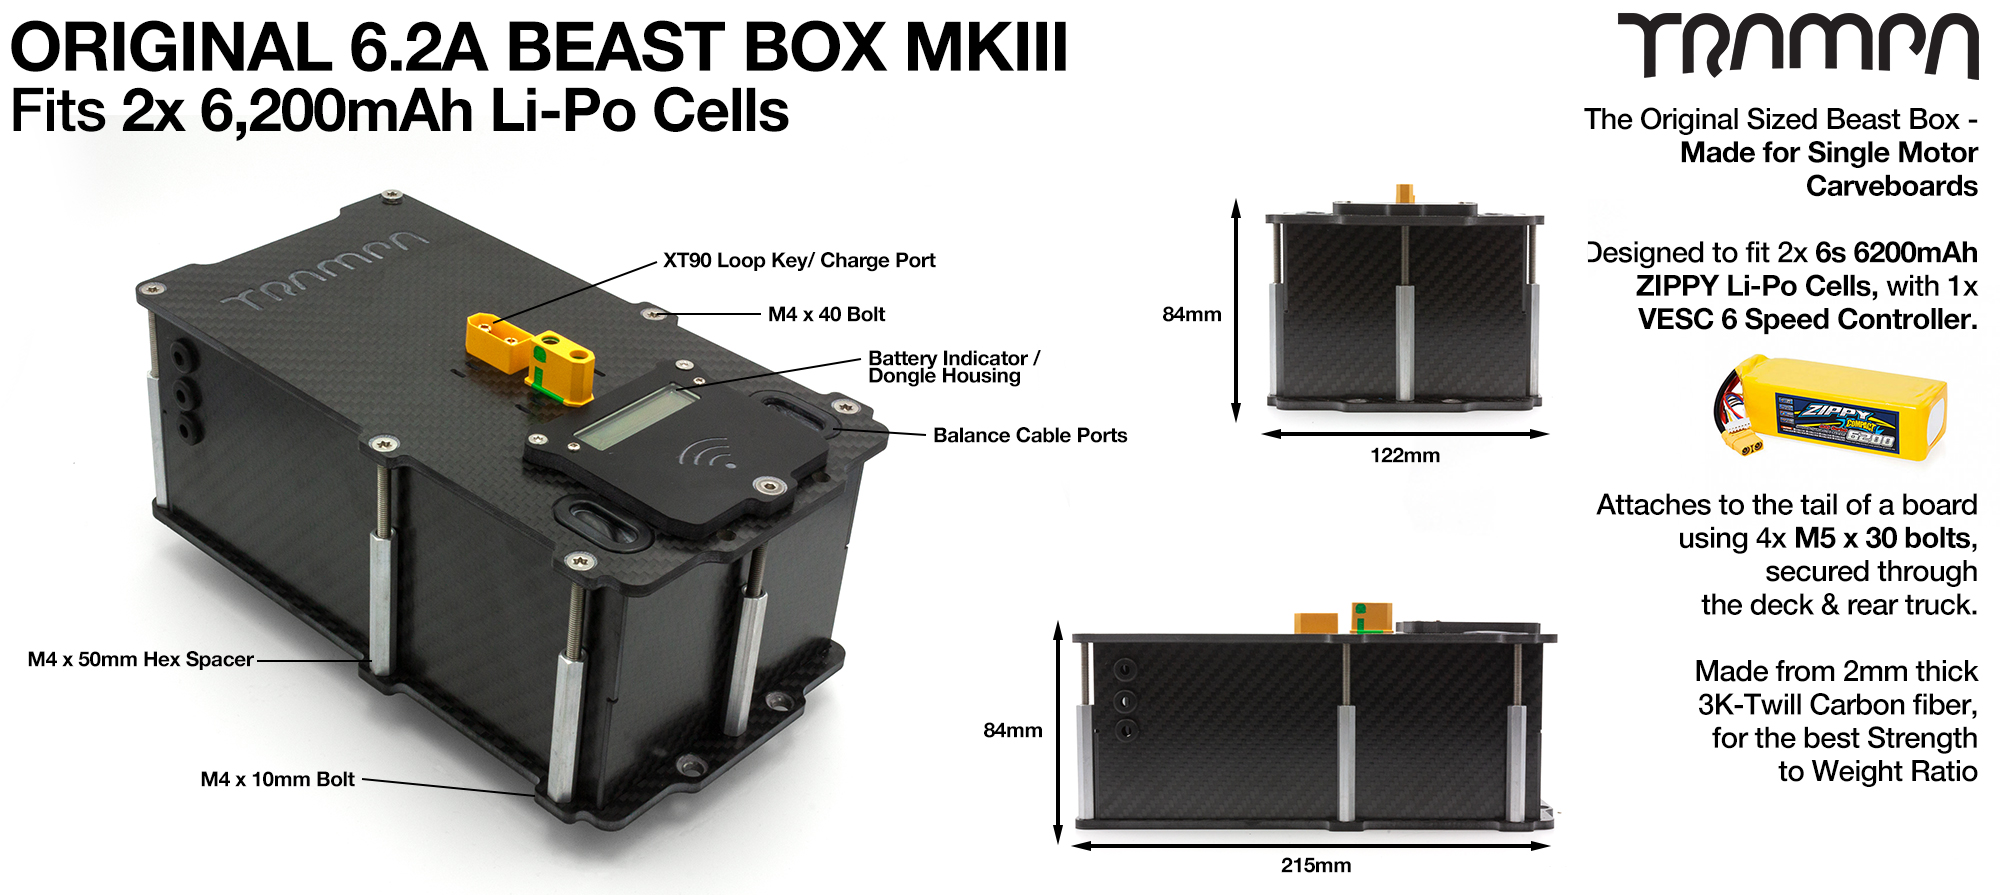 MkIII 6.2Ah BEAST Box fits 2x Zippy Compact 6200 mAh cells with Internal VESC Housing  